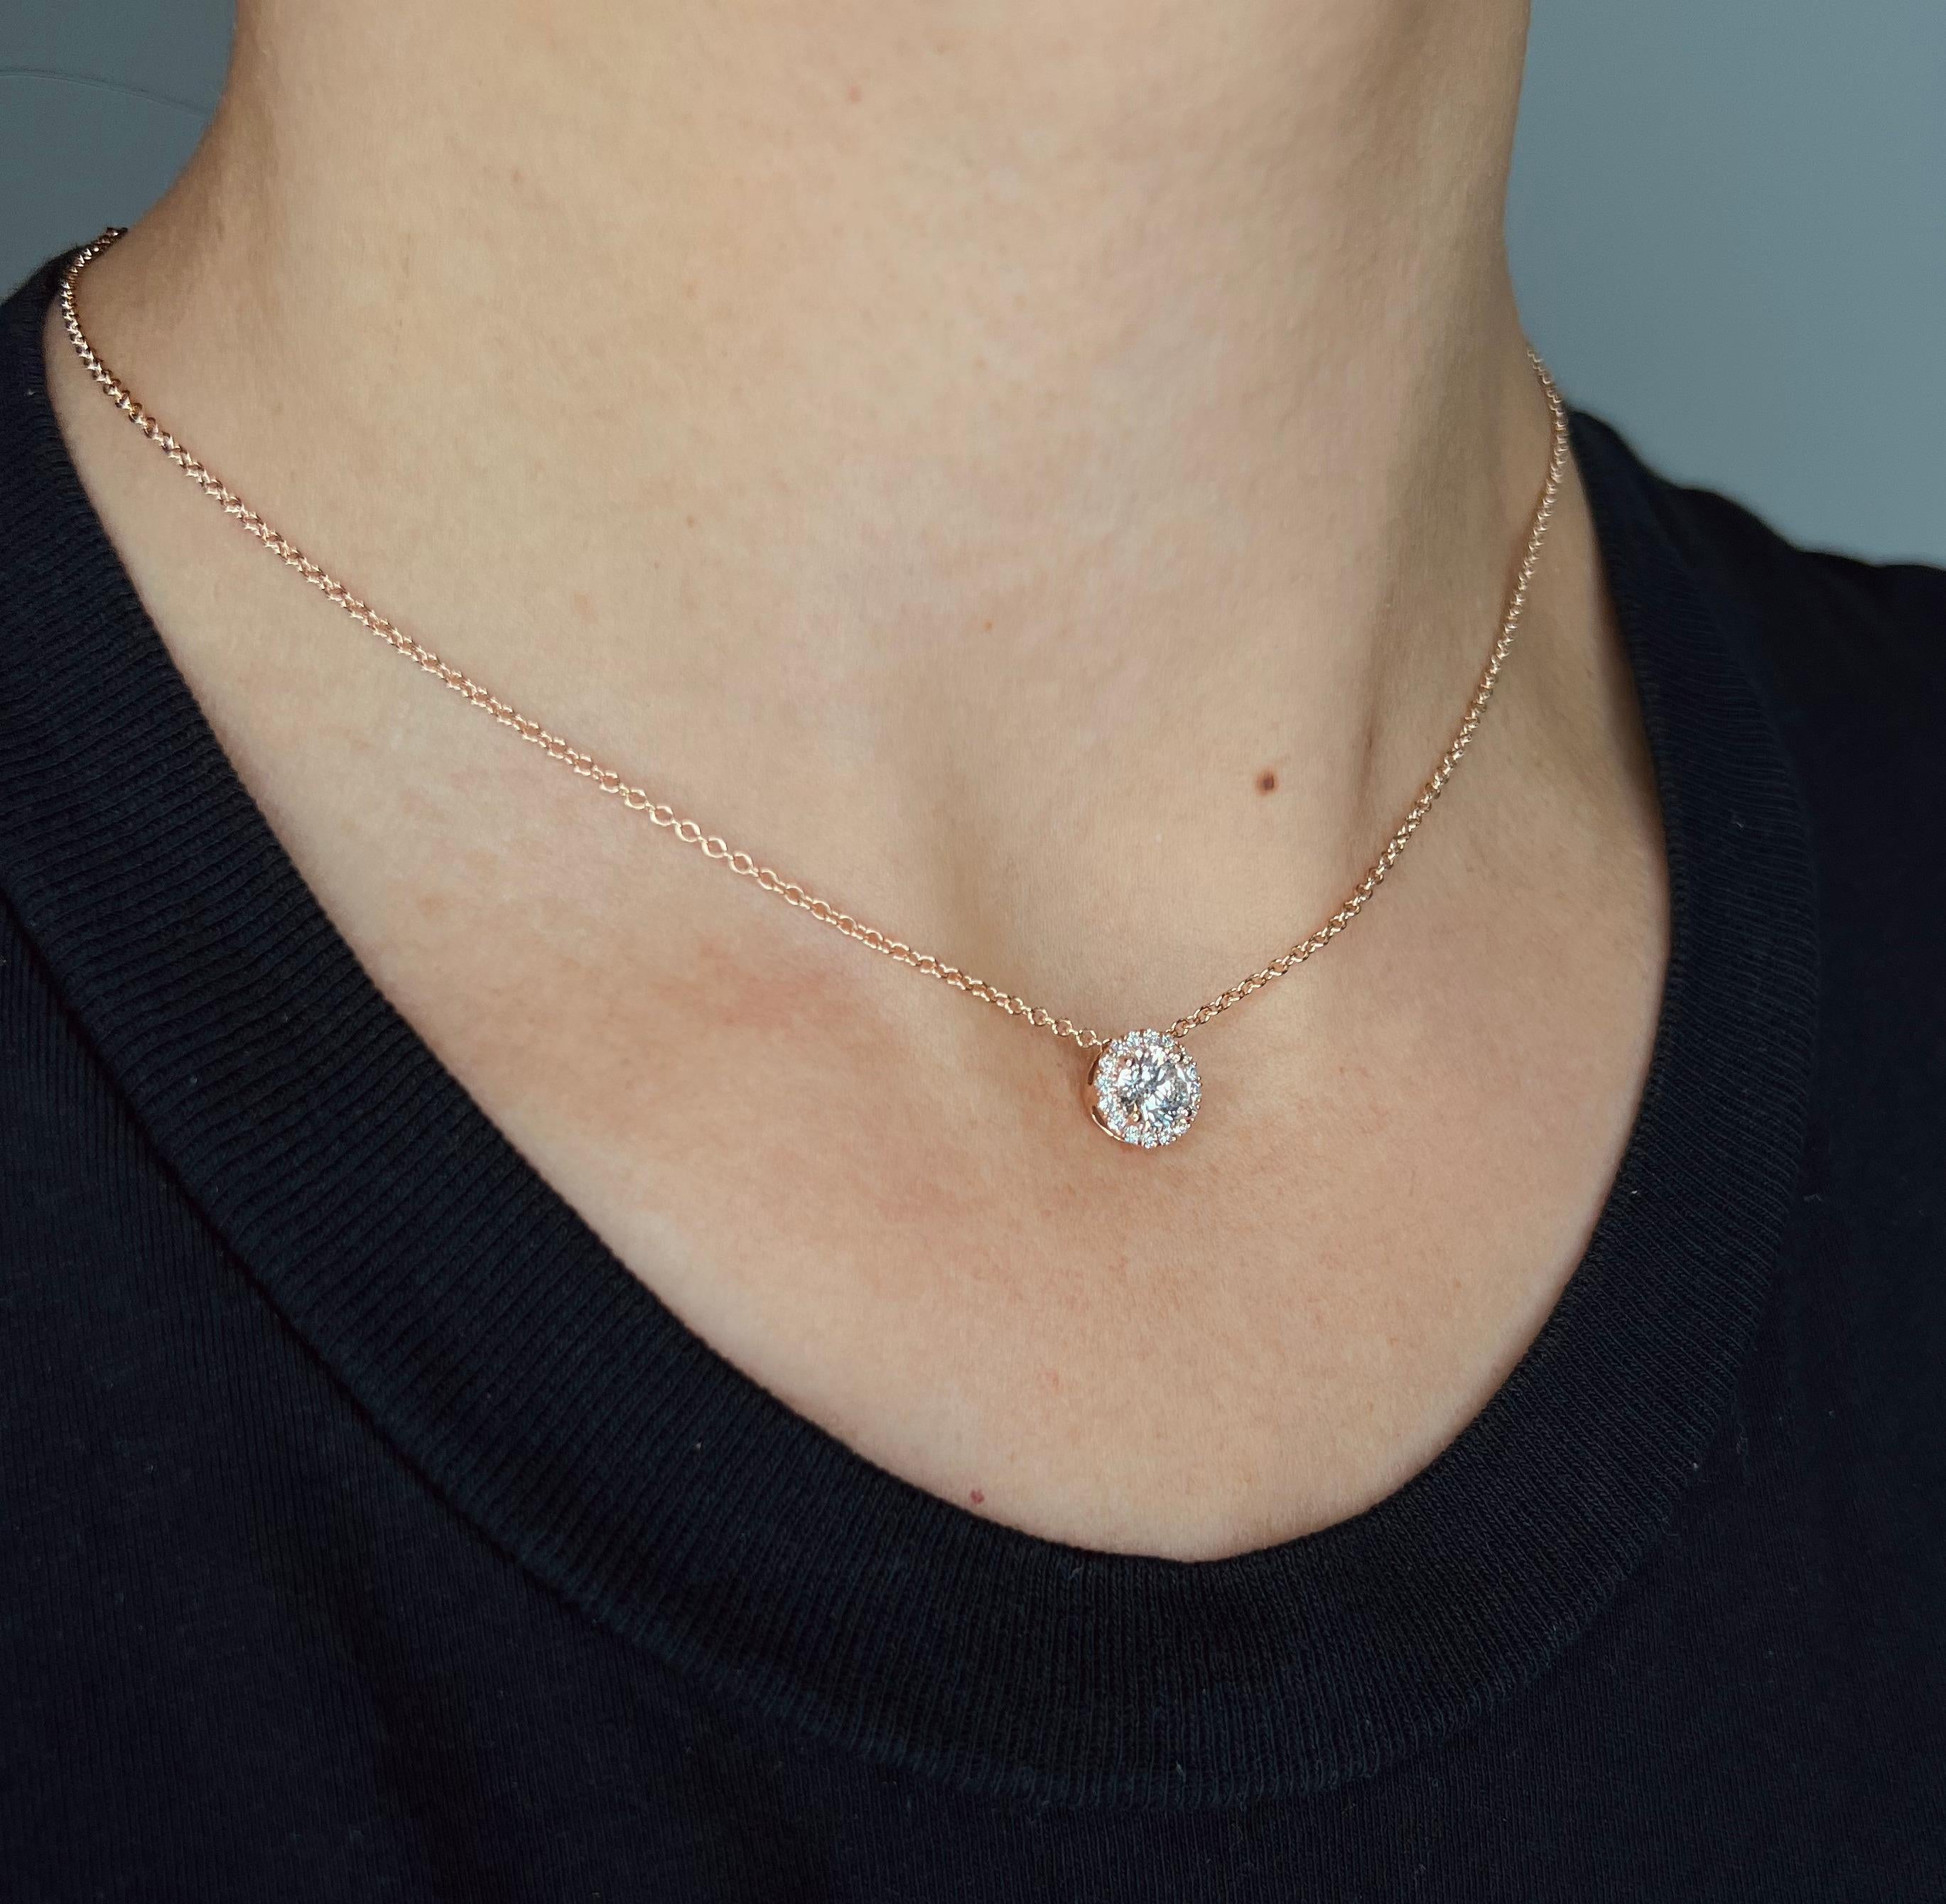 Women's or Men's 22 Inch 14k White Gold 0.40 Carat Round Cut Diamond Solitaire Pendant Necklace For Sale